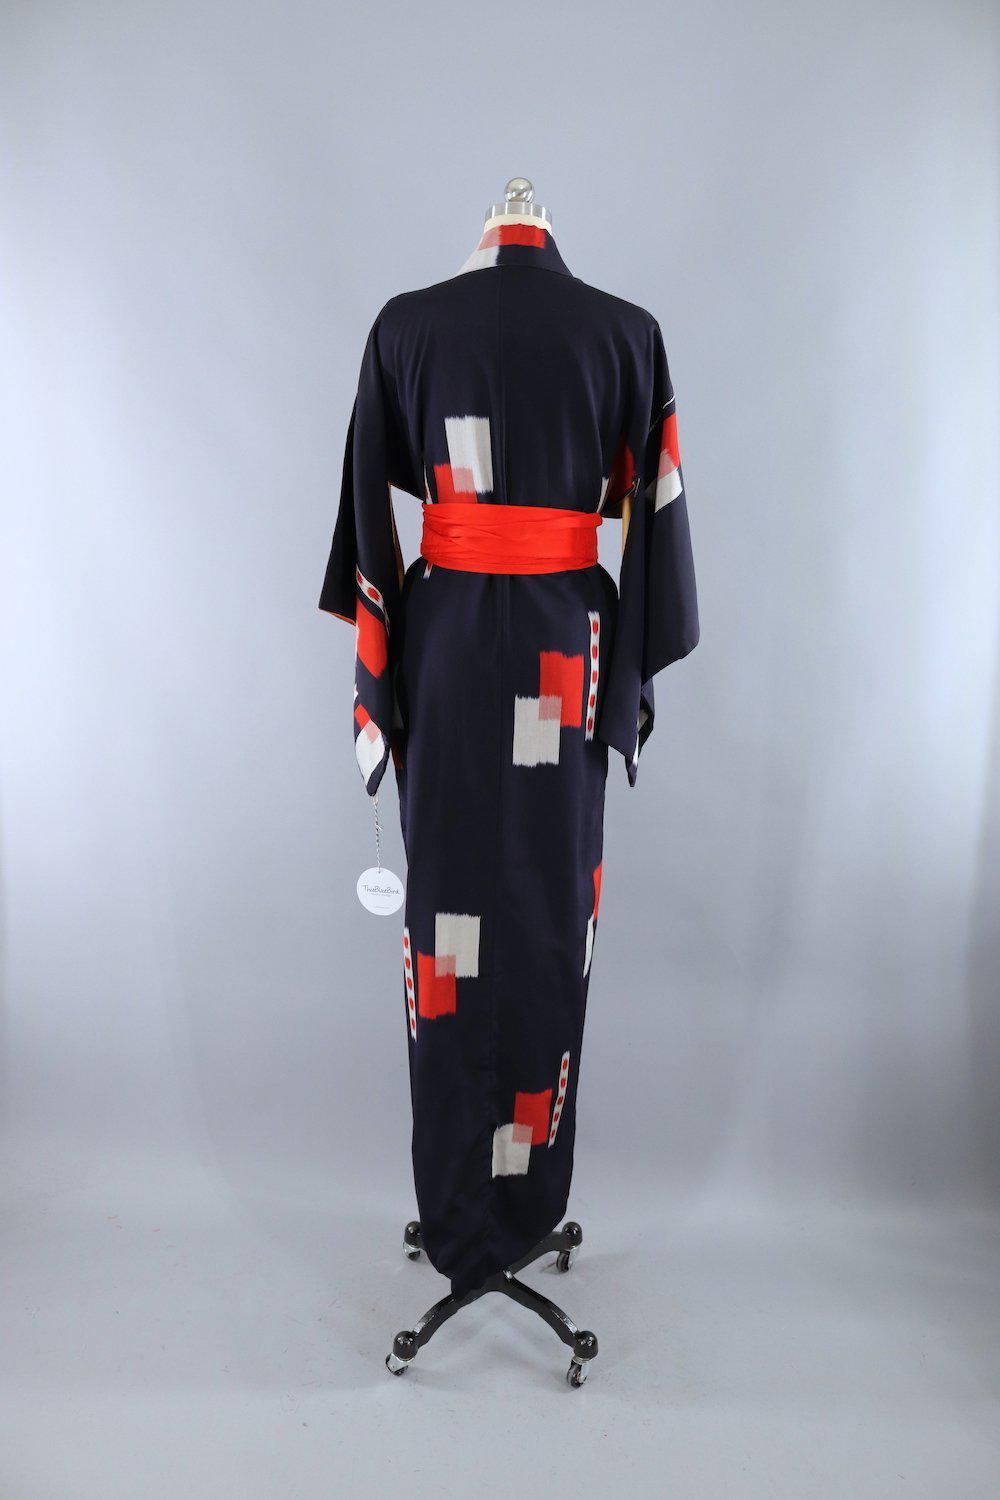 Vintage 1940s Silk Kimono Robe / Dark Navy and Red - ThisBlueBird